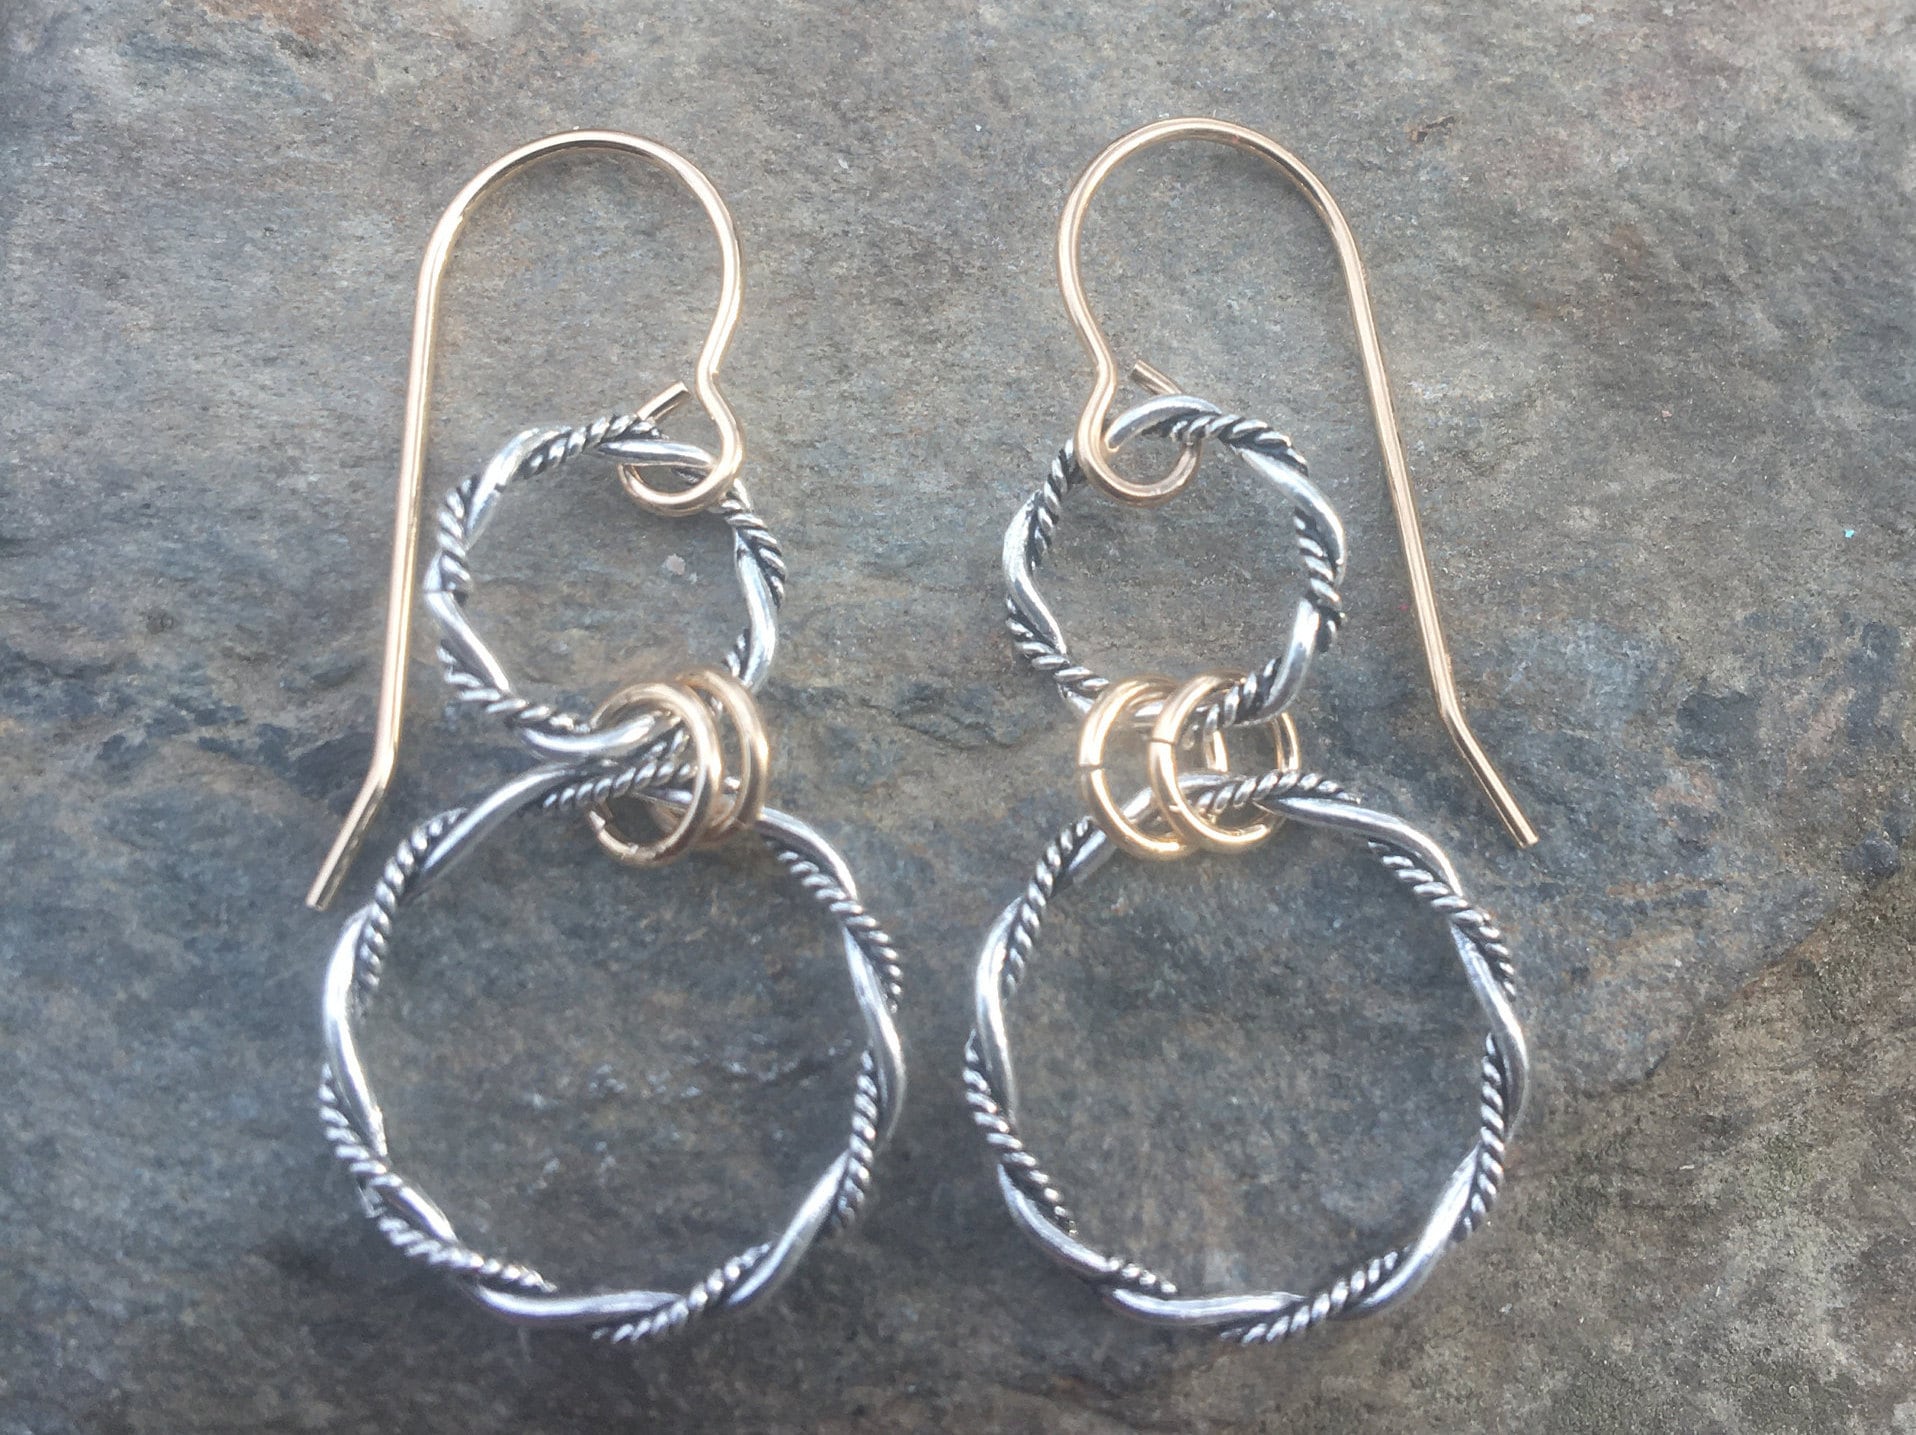 Dotted Studs Earrings, 925 Silver Earrings, Handmade Earrings, Silver Woman  Earrings, Statement Earrings, Jewelry for her, Everyday Earrings | Jewelry  for her, Earrings handmade, Silver earrings